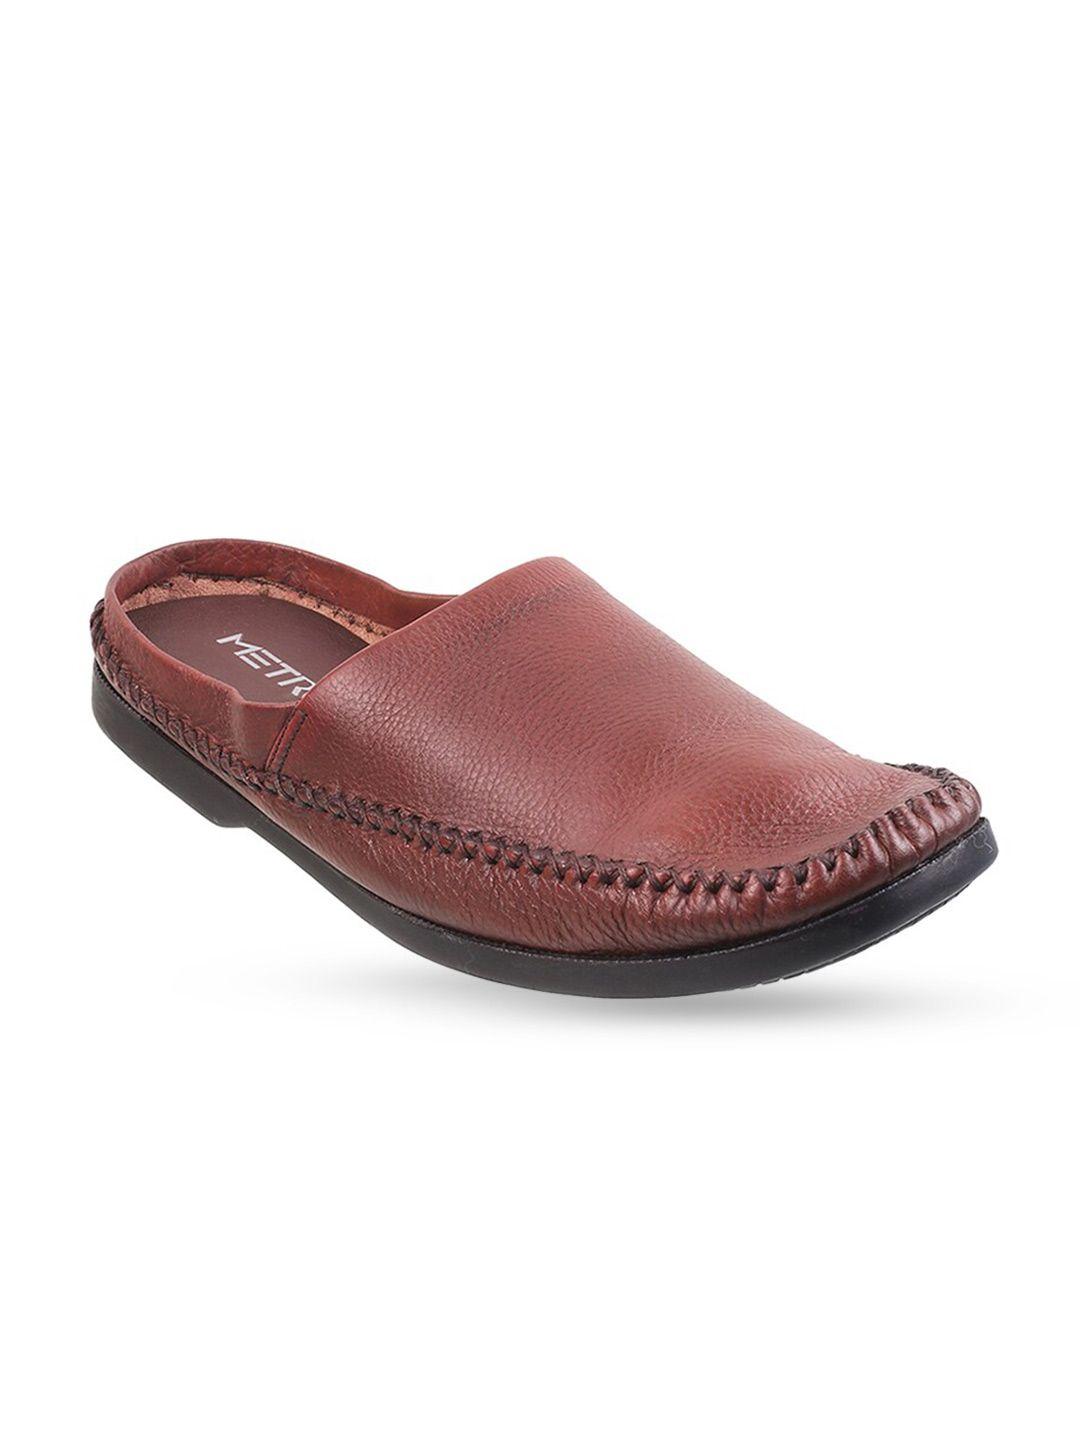 Metro Men Leather Shoe-Style Sandals